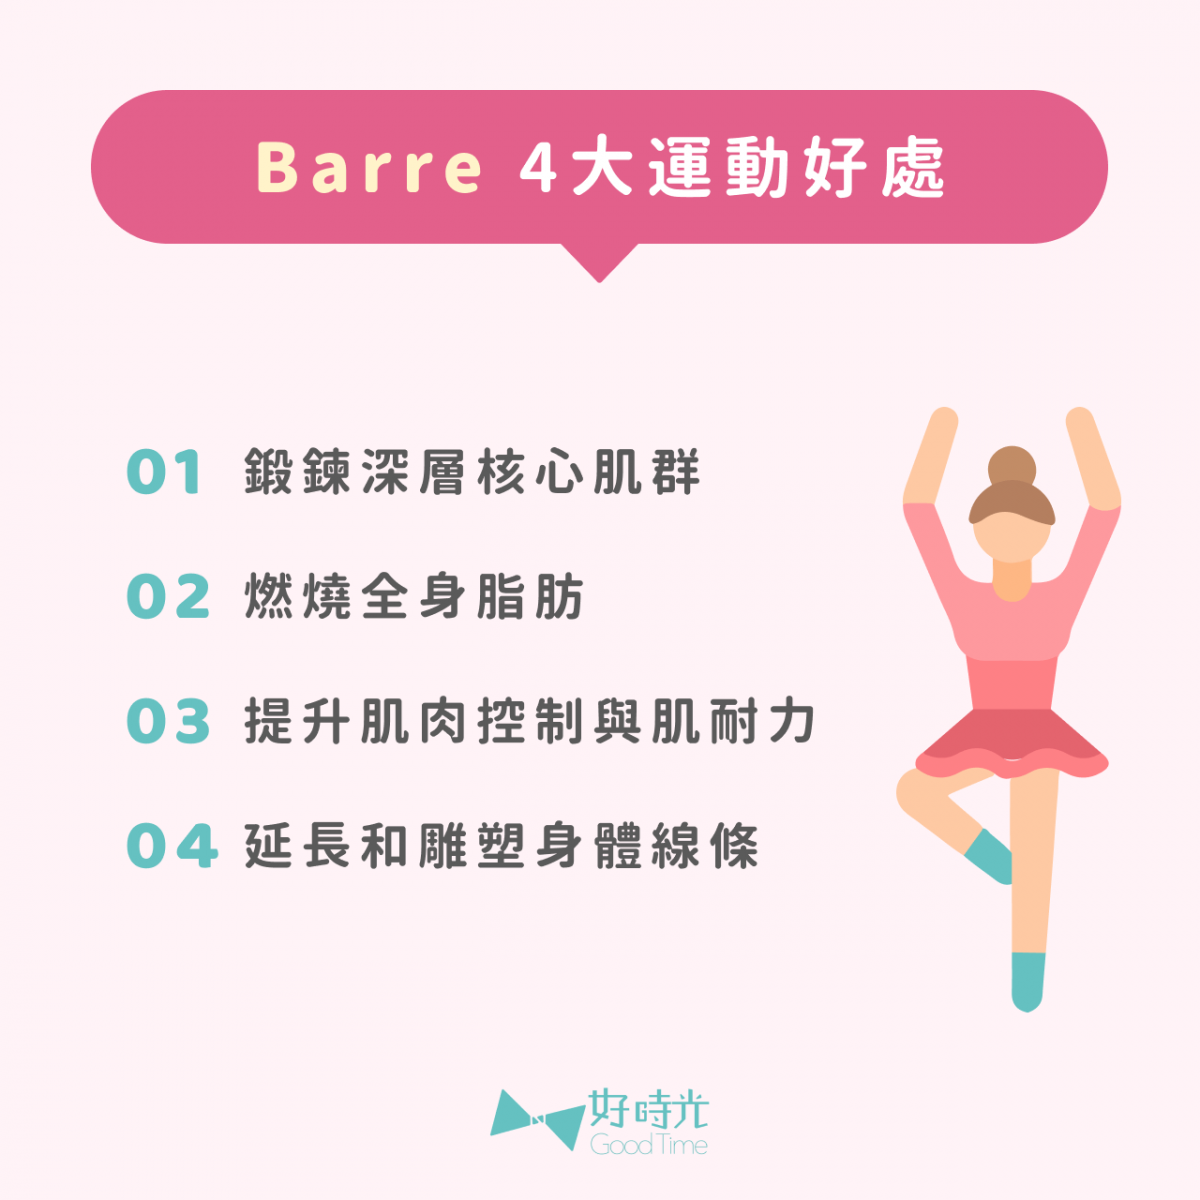 Barre 4大運動好處：1.鍛鍊深層核心肌群 2.燃燒全身脂肪 3.提升肌肉控制與肌耐力 4.延長和雕塑身體線條